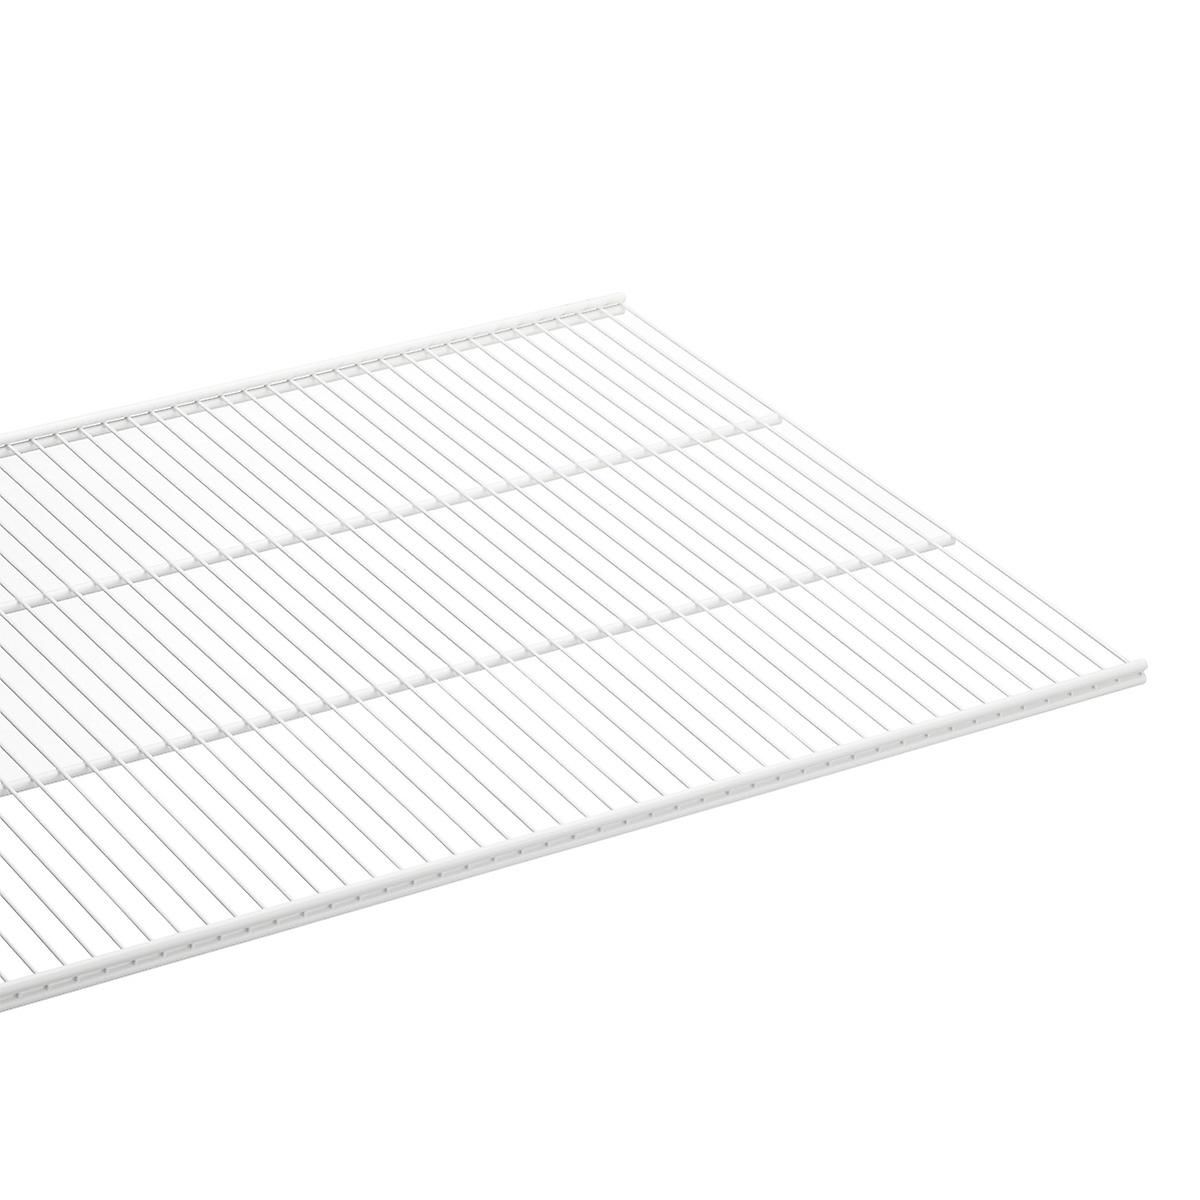 16" x 3' Elfa Ventilated Shelf White | The Container Store